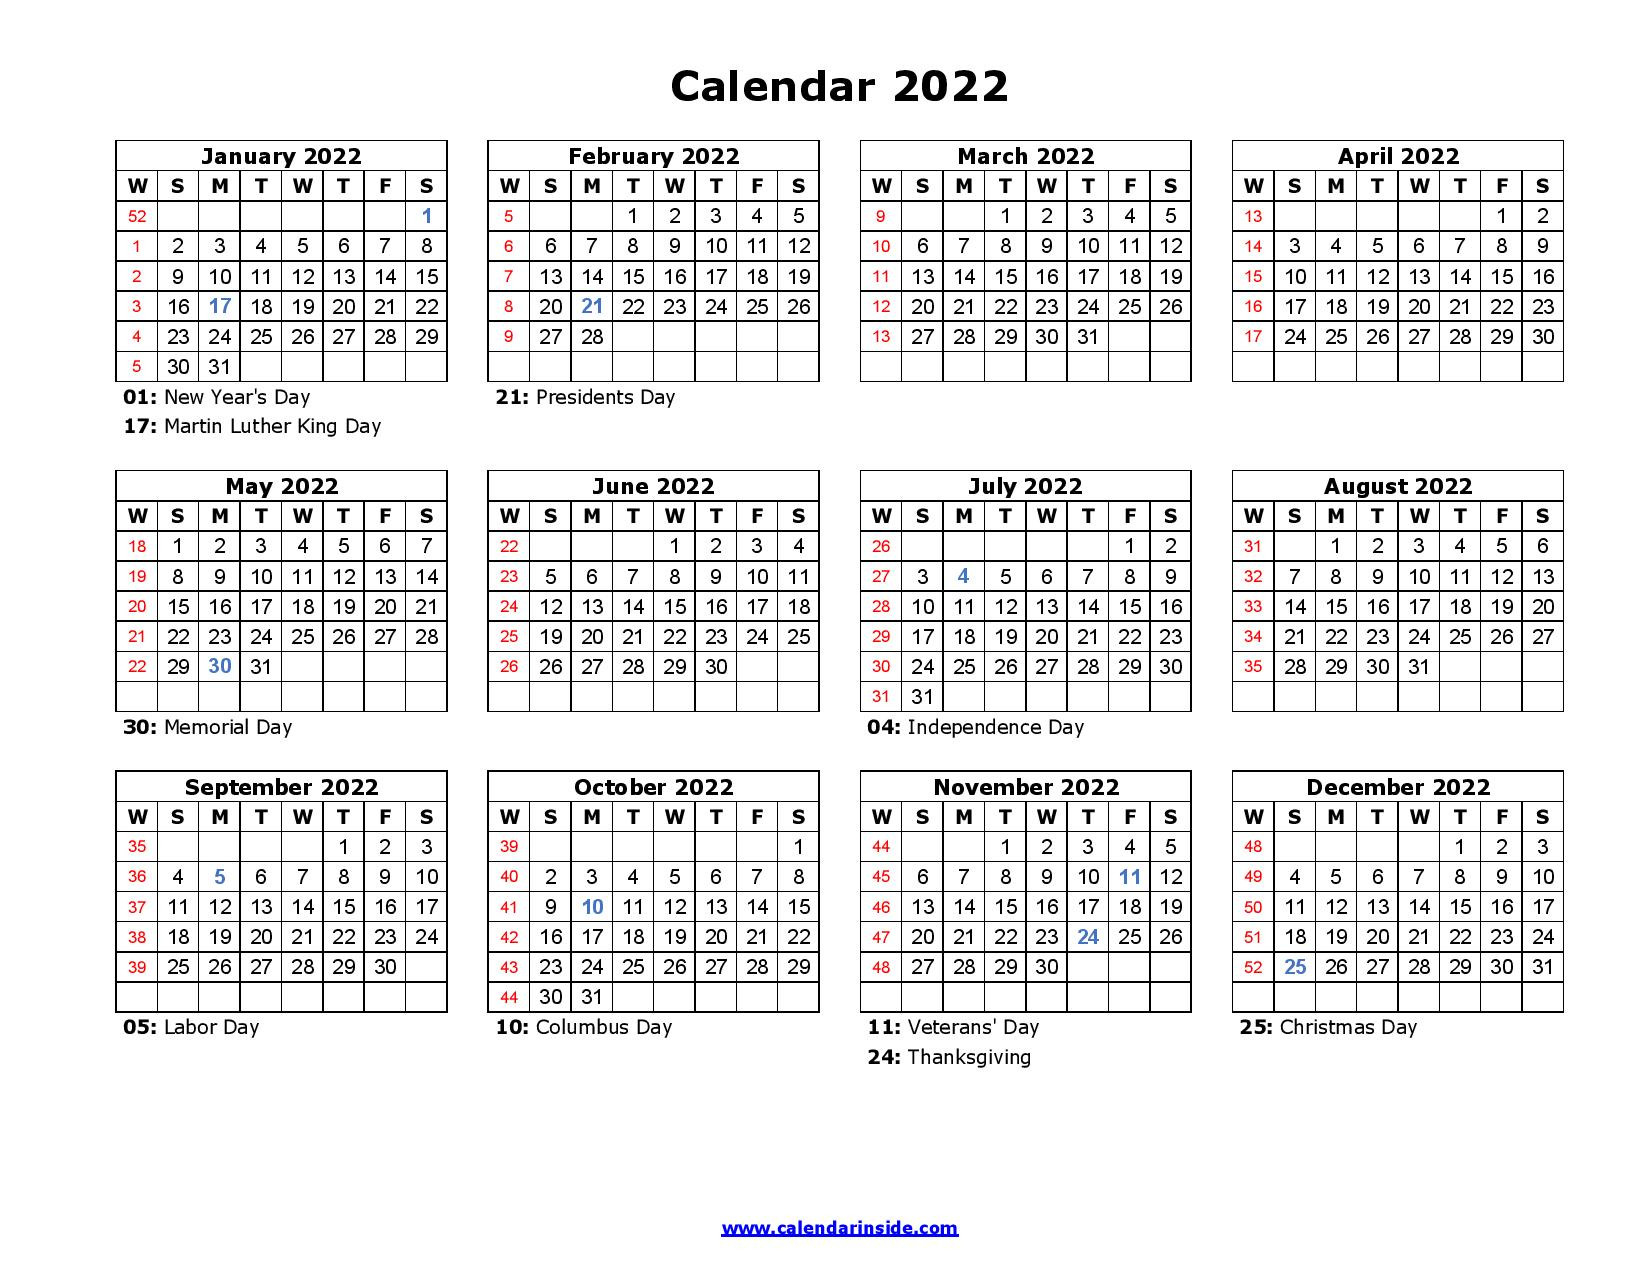 Free Printable Calendar 2022 Templates - Yearly Calendars  Annual Calendar For 2022